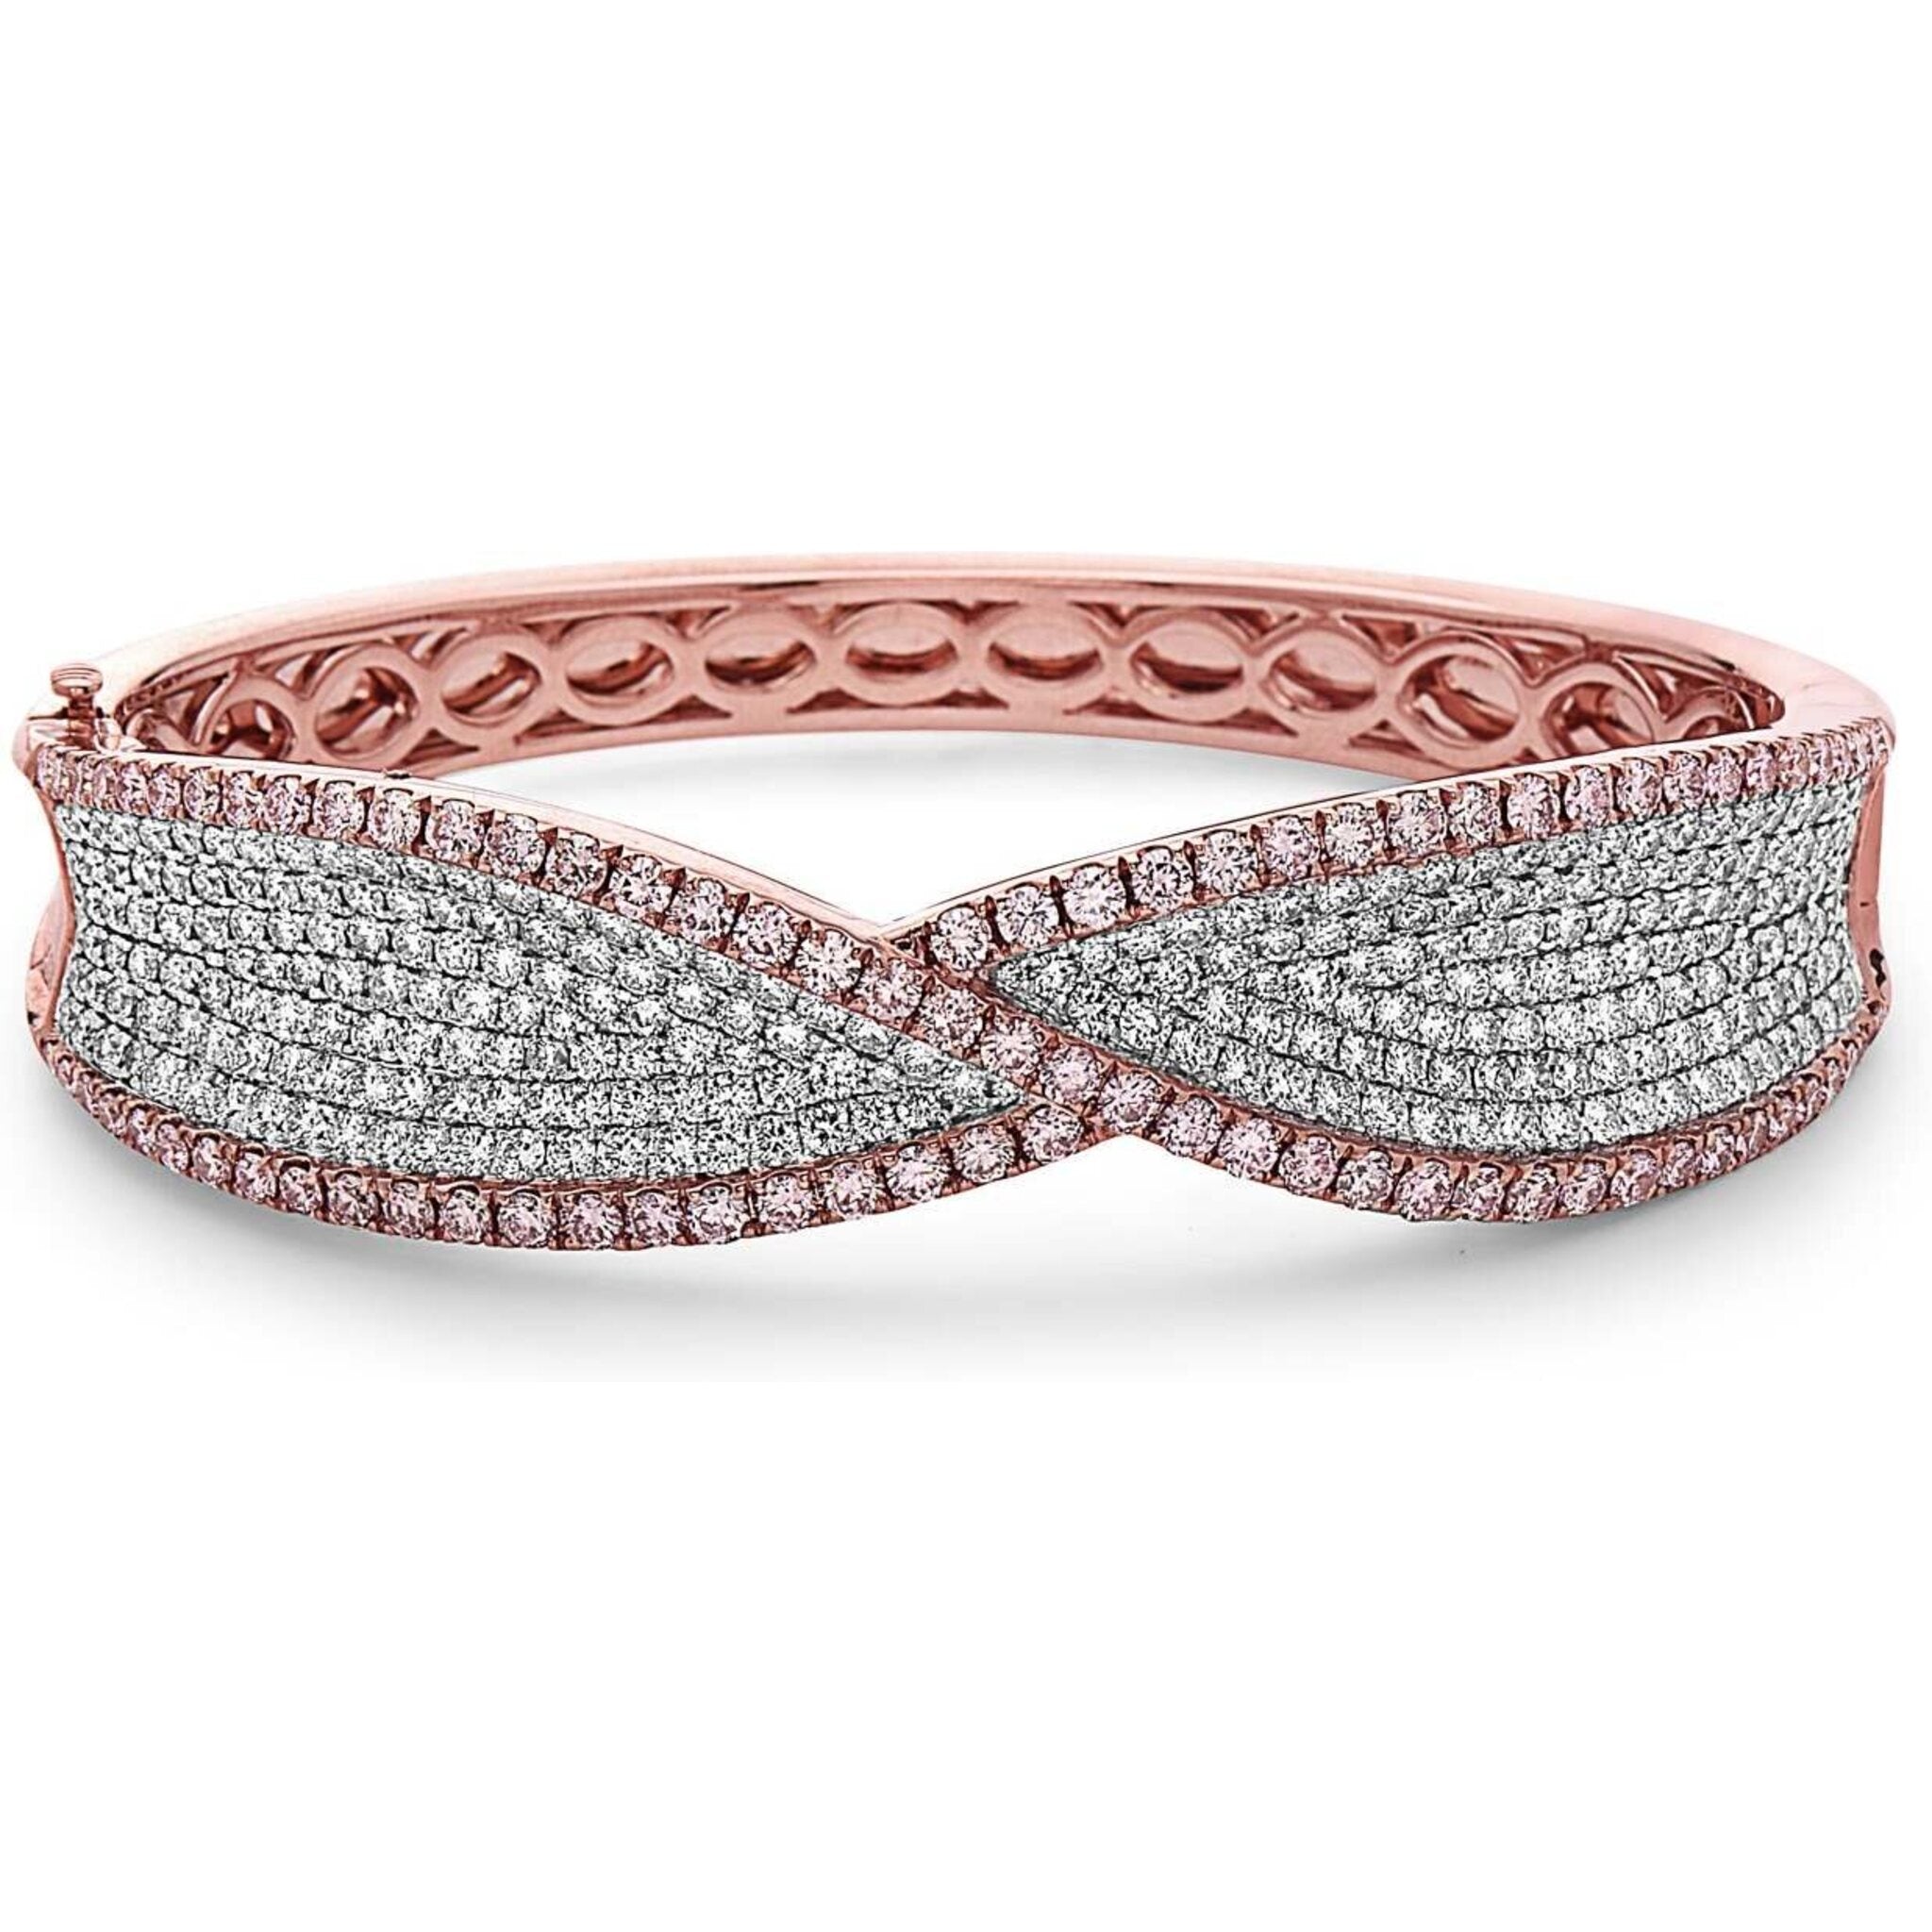 Charles Krypell - Precious Diamond Twisted Bracelet - Pink Diamond